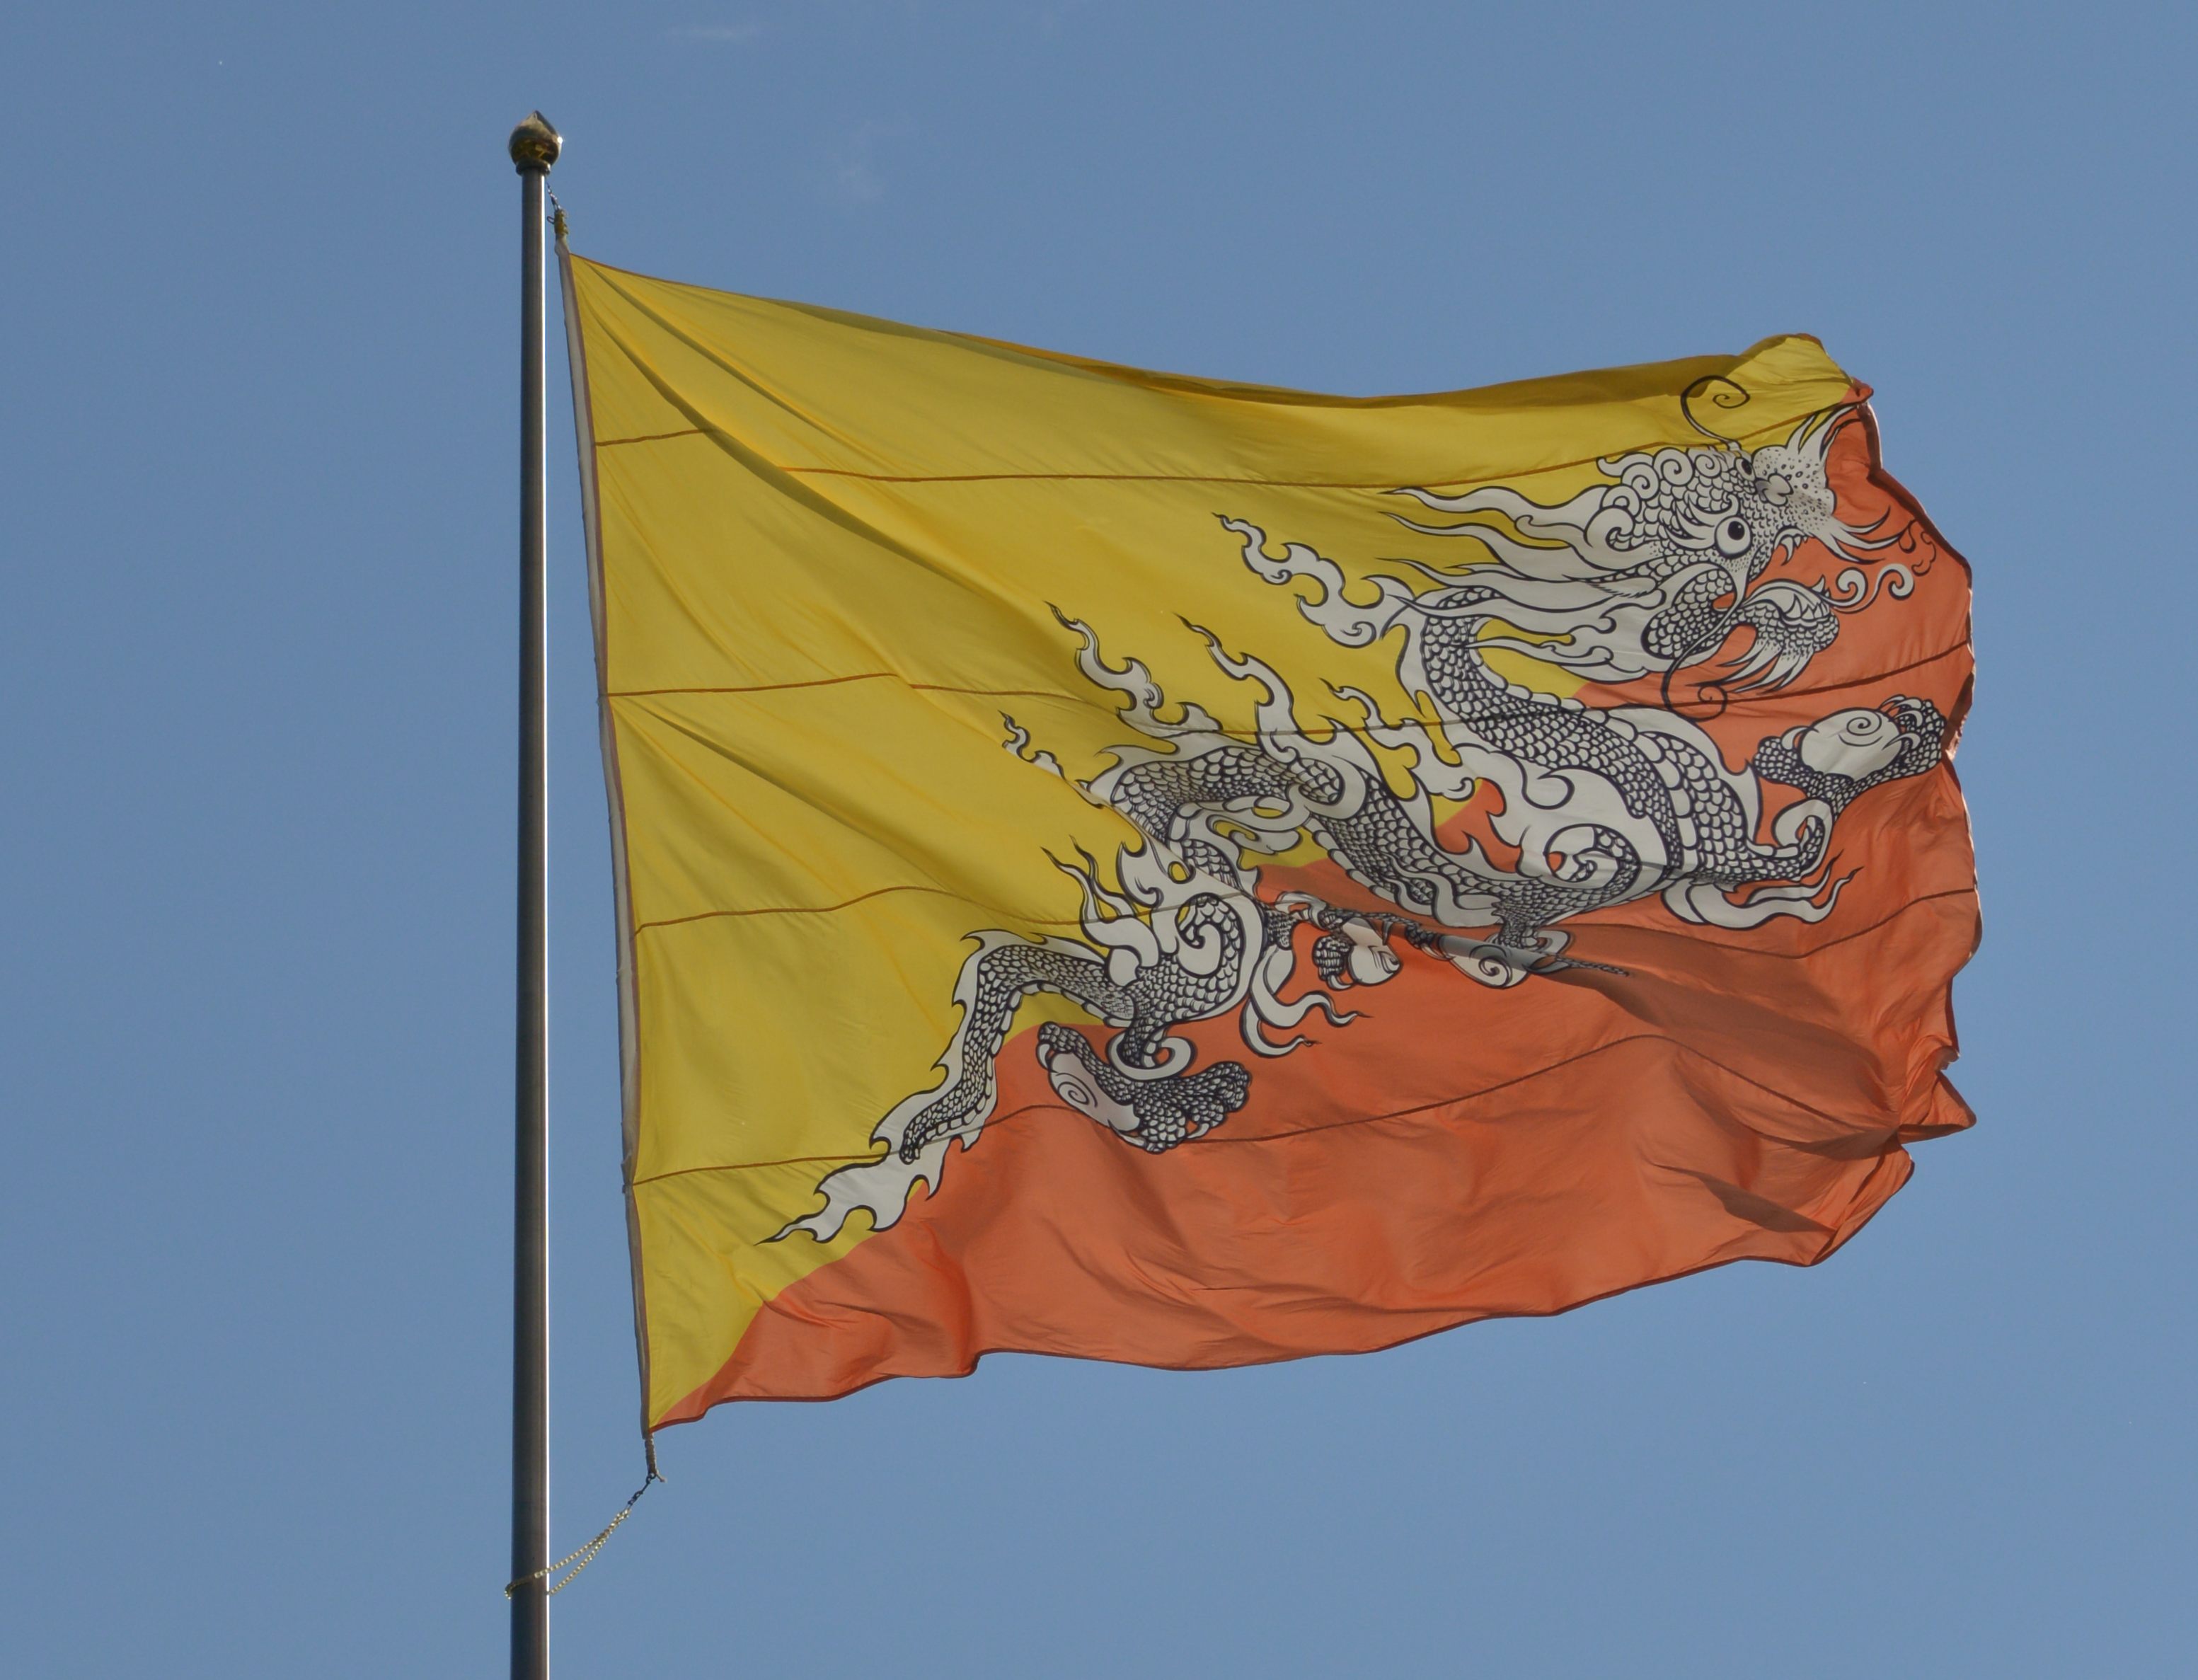 The white dragon of the flag of modern Bhutan